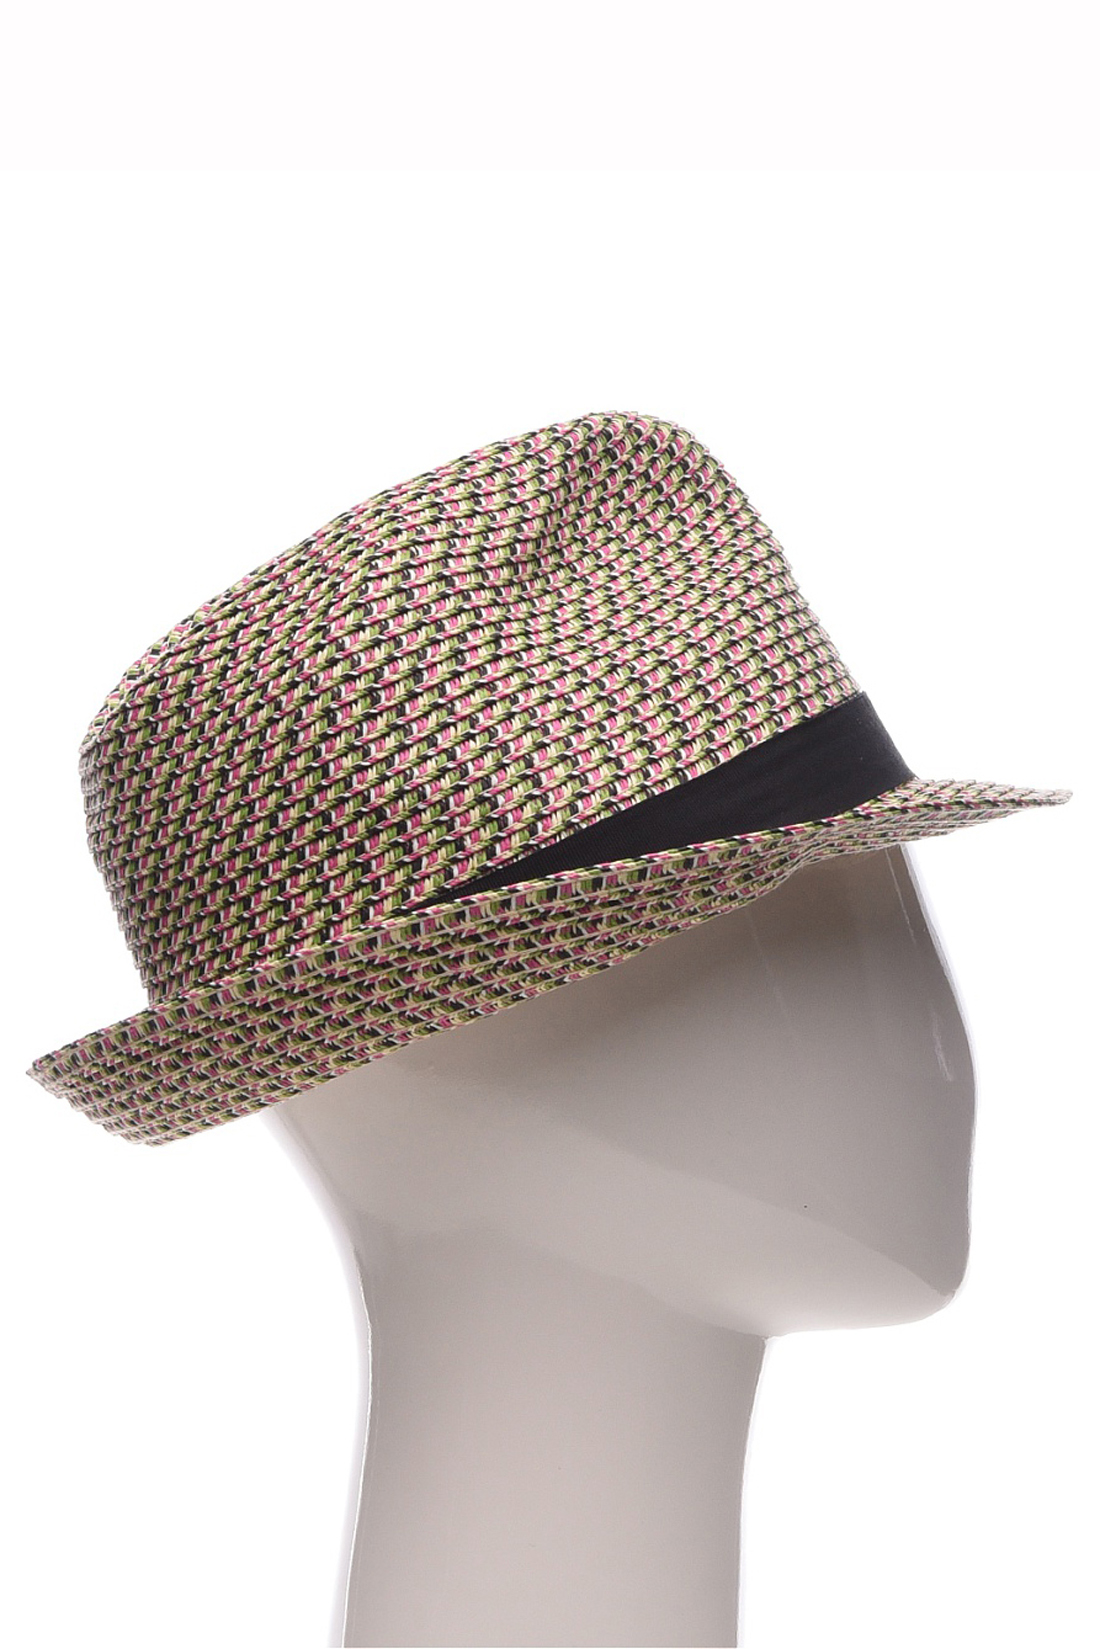 Шляпа с разноцветным плетением (арт. baon B849001), размер Б/р 58 Шляпа с разноцветным плетением (арт. baon B849001) - фото 3